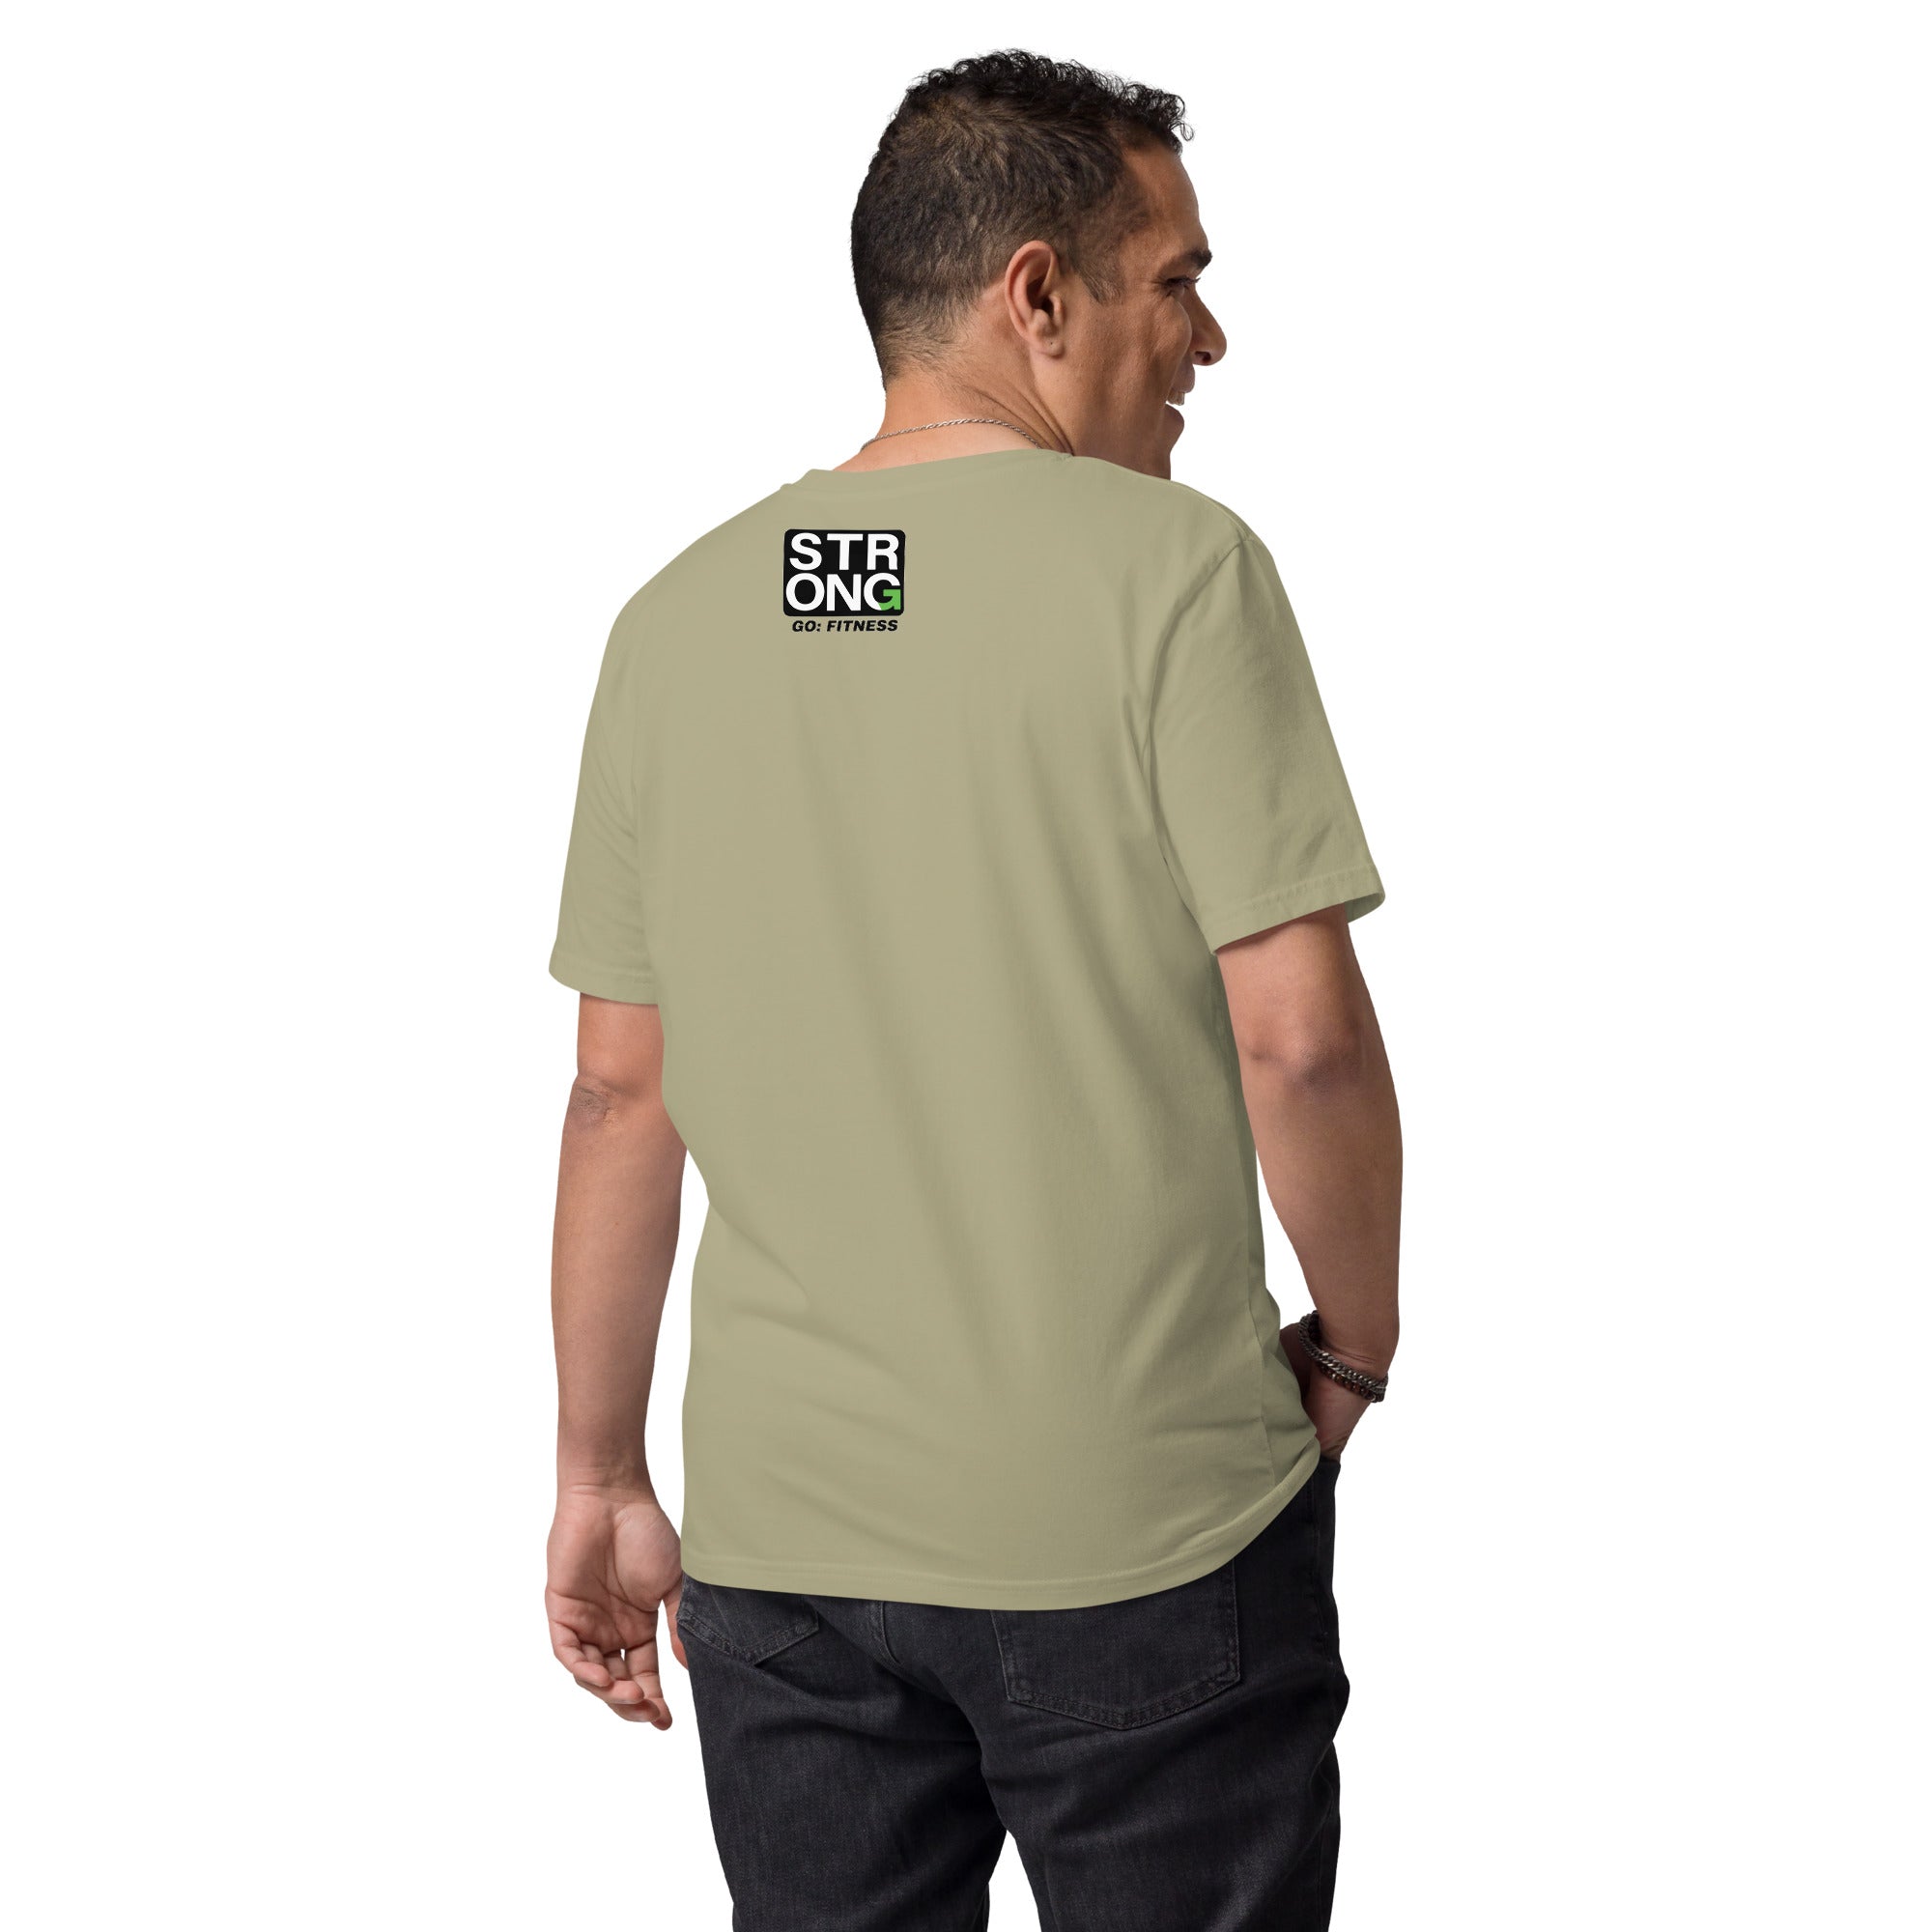 I love Squats Light Mens - Unisex organic cotton t-shirt